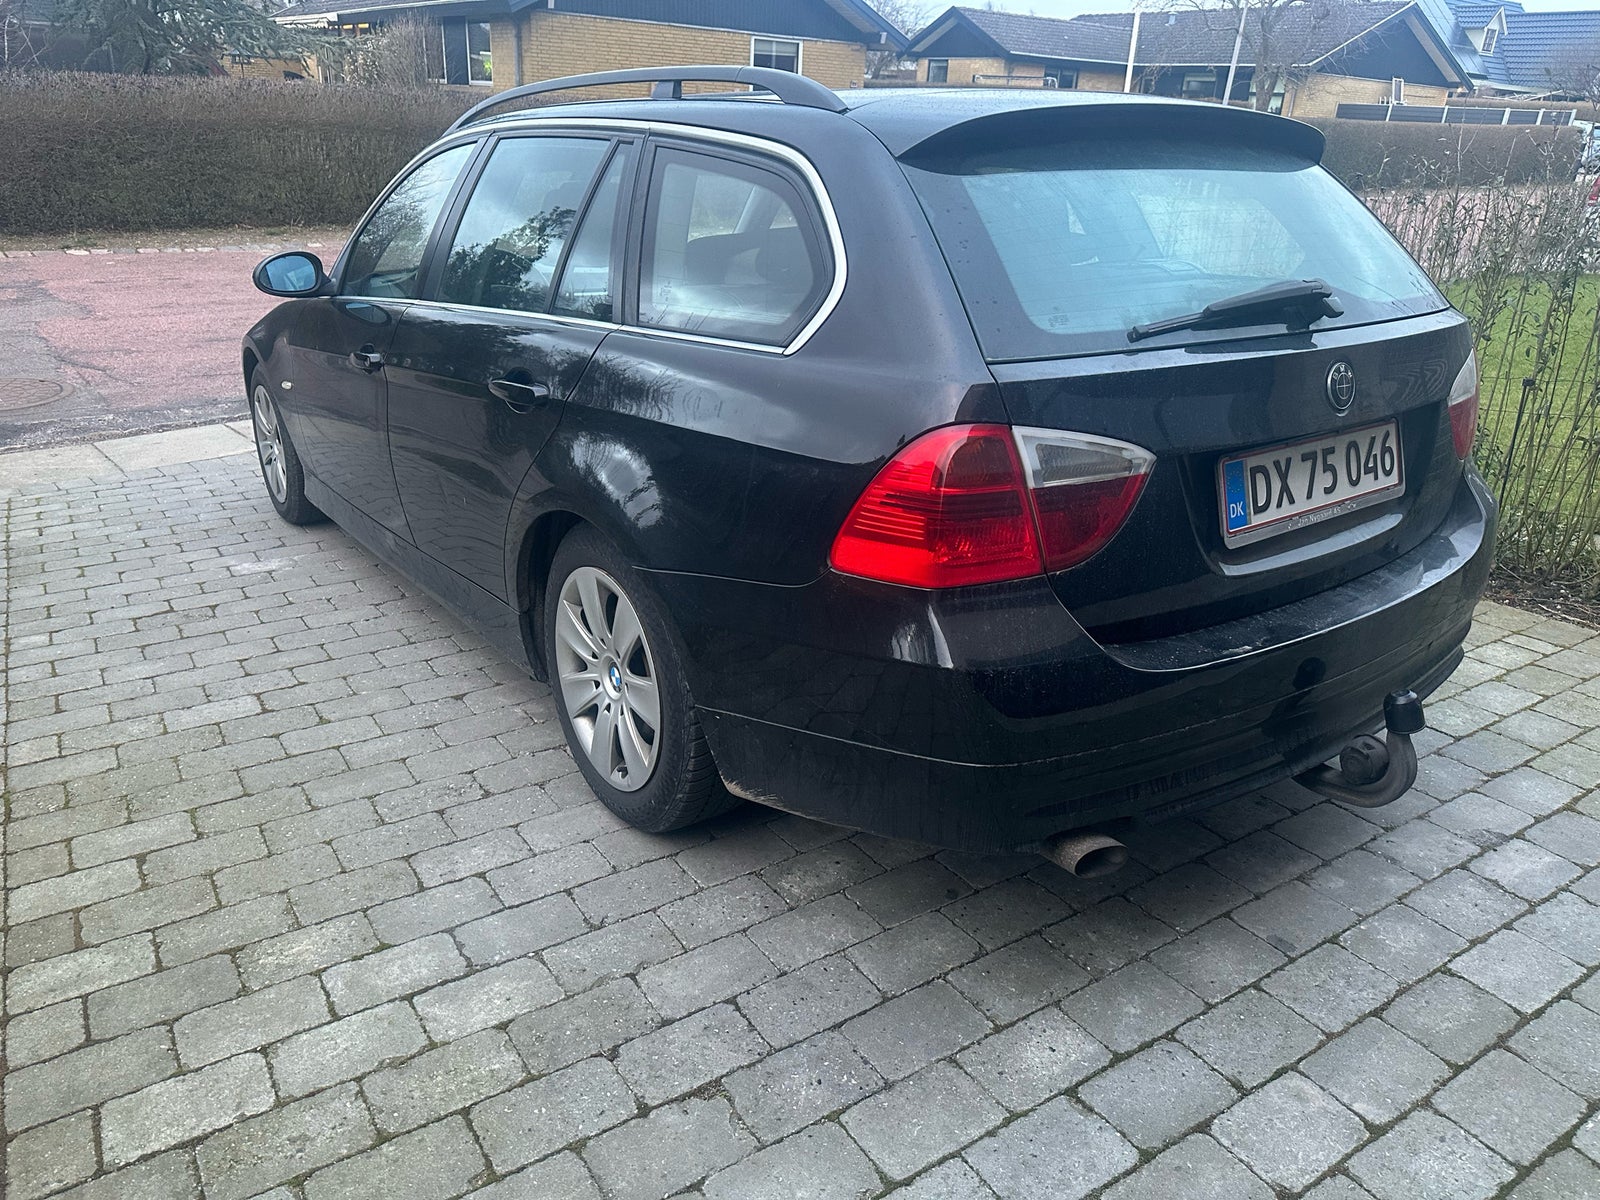 BMW 320d, 2,0 Touring Steptr., Diesel